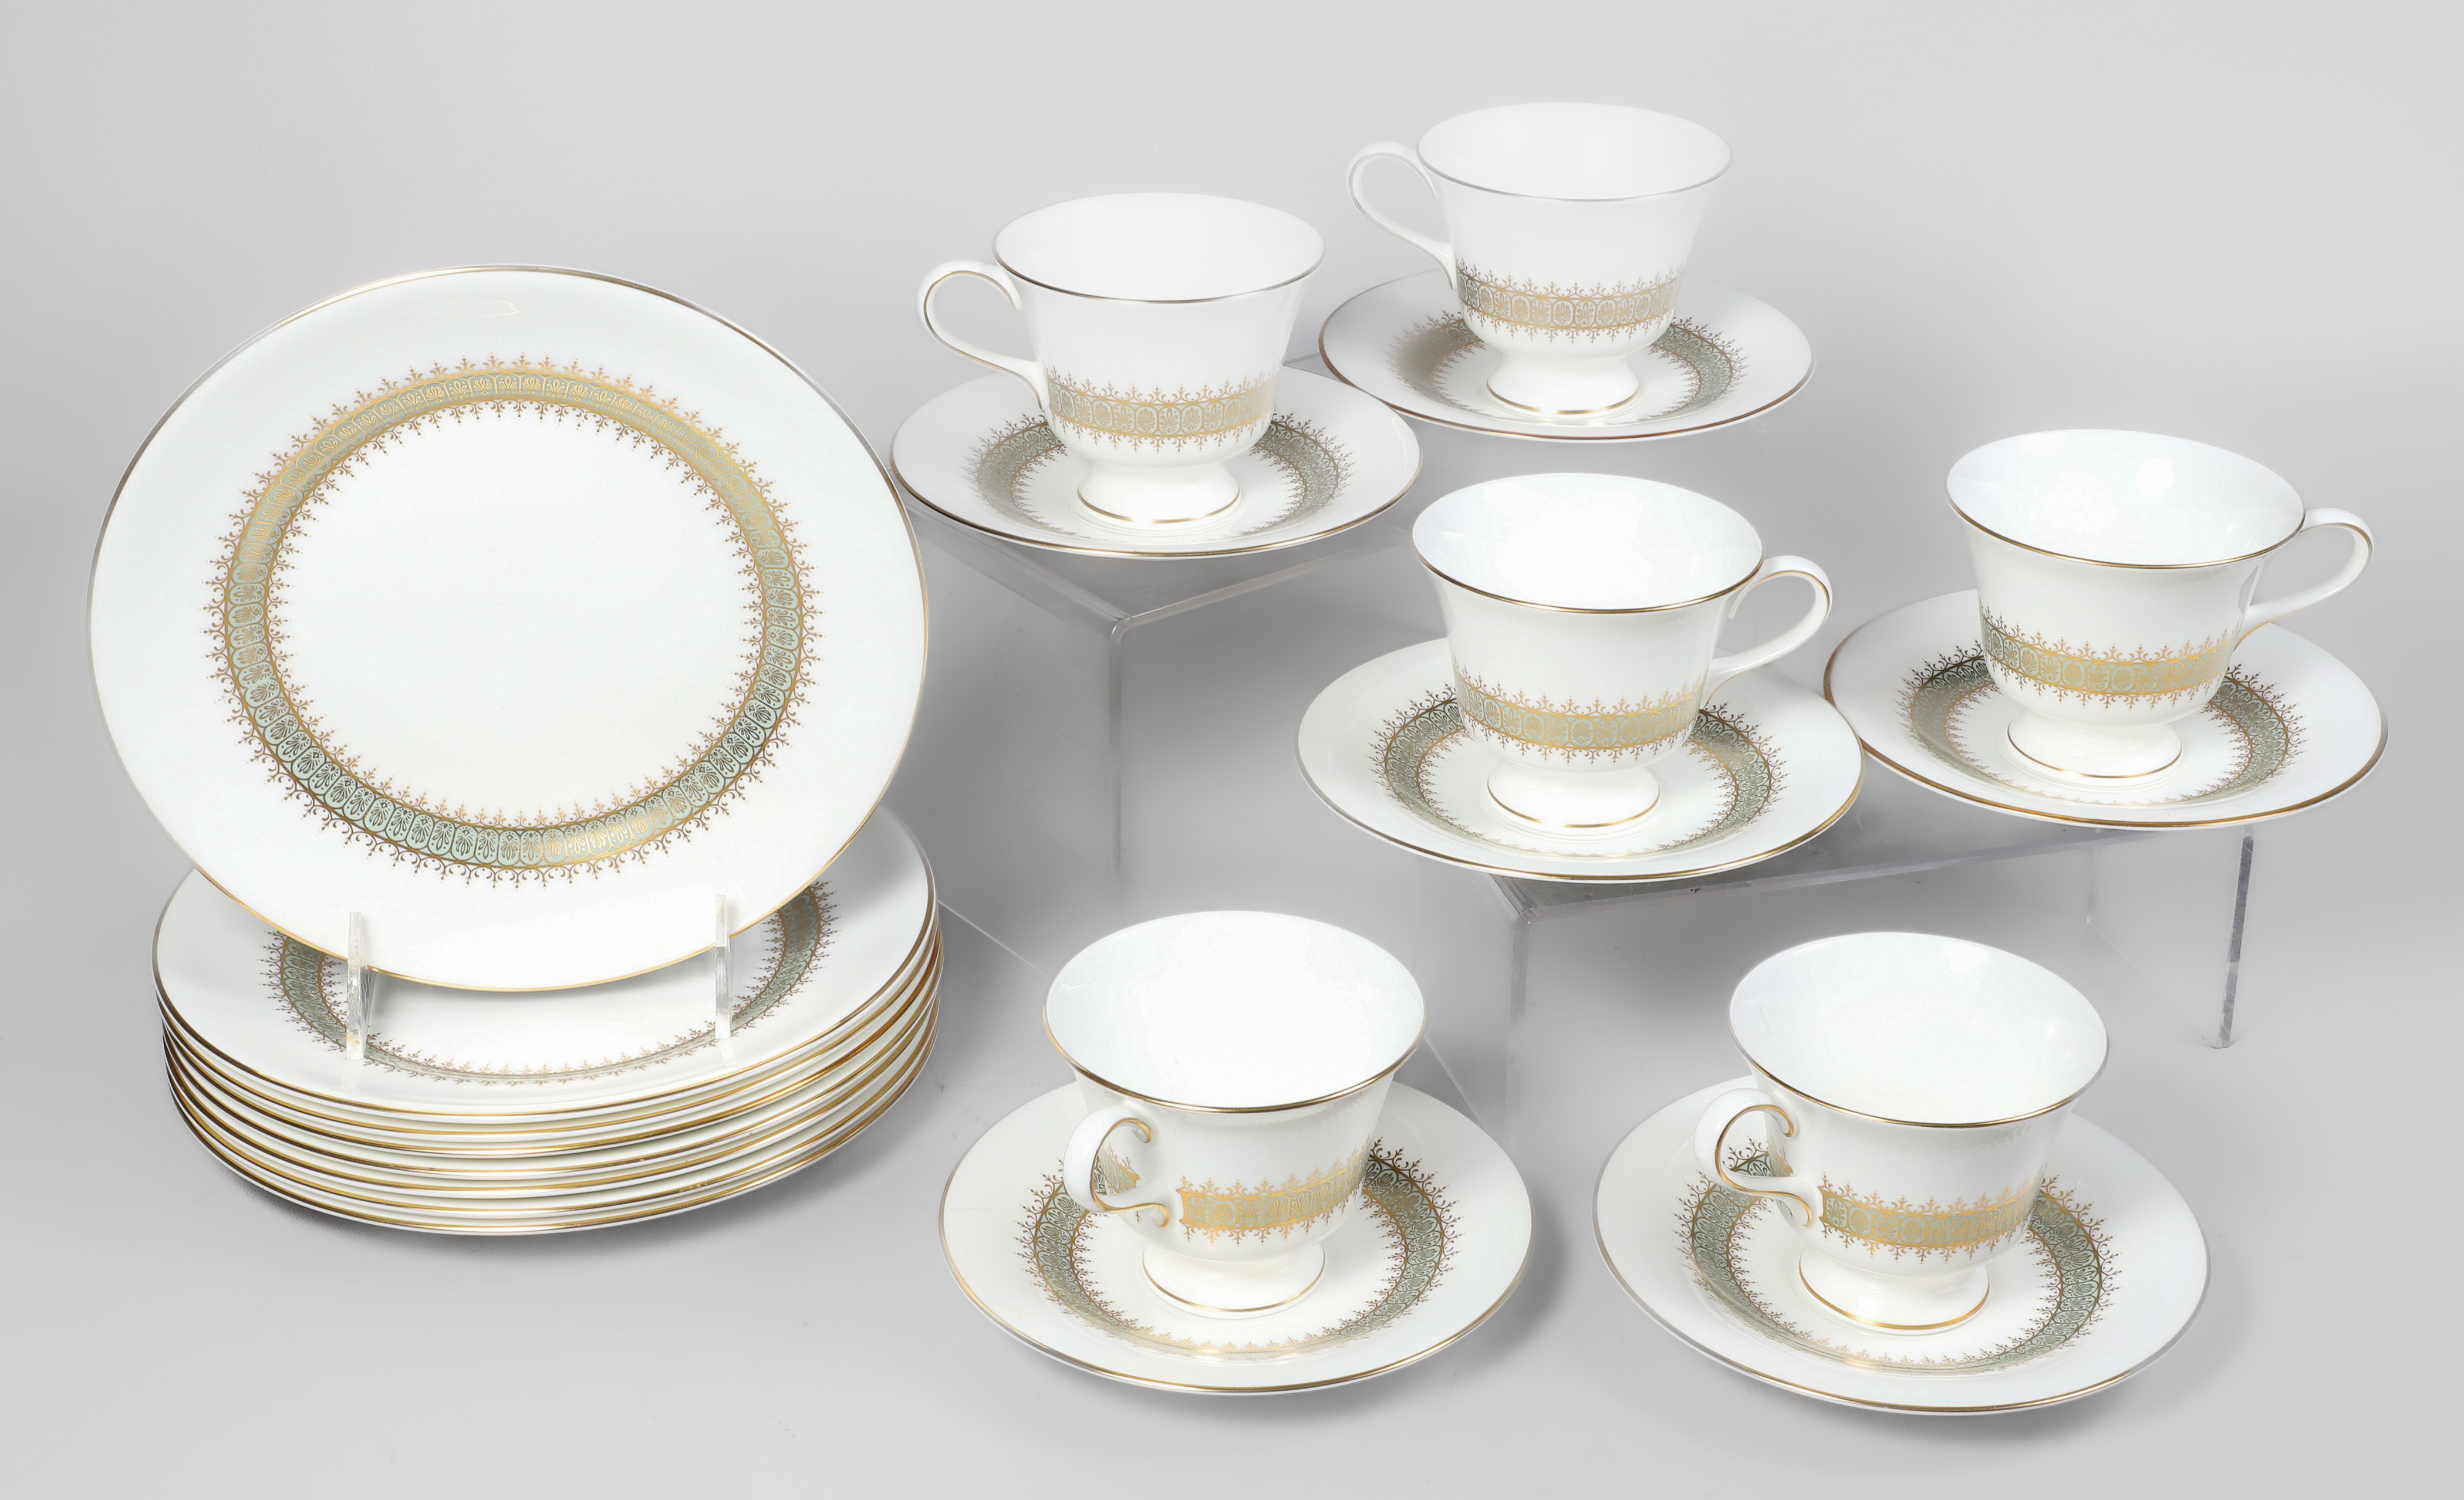  20 Pcs Wedgwood porcelain dinnerware  2e192c